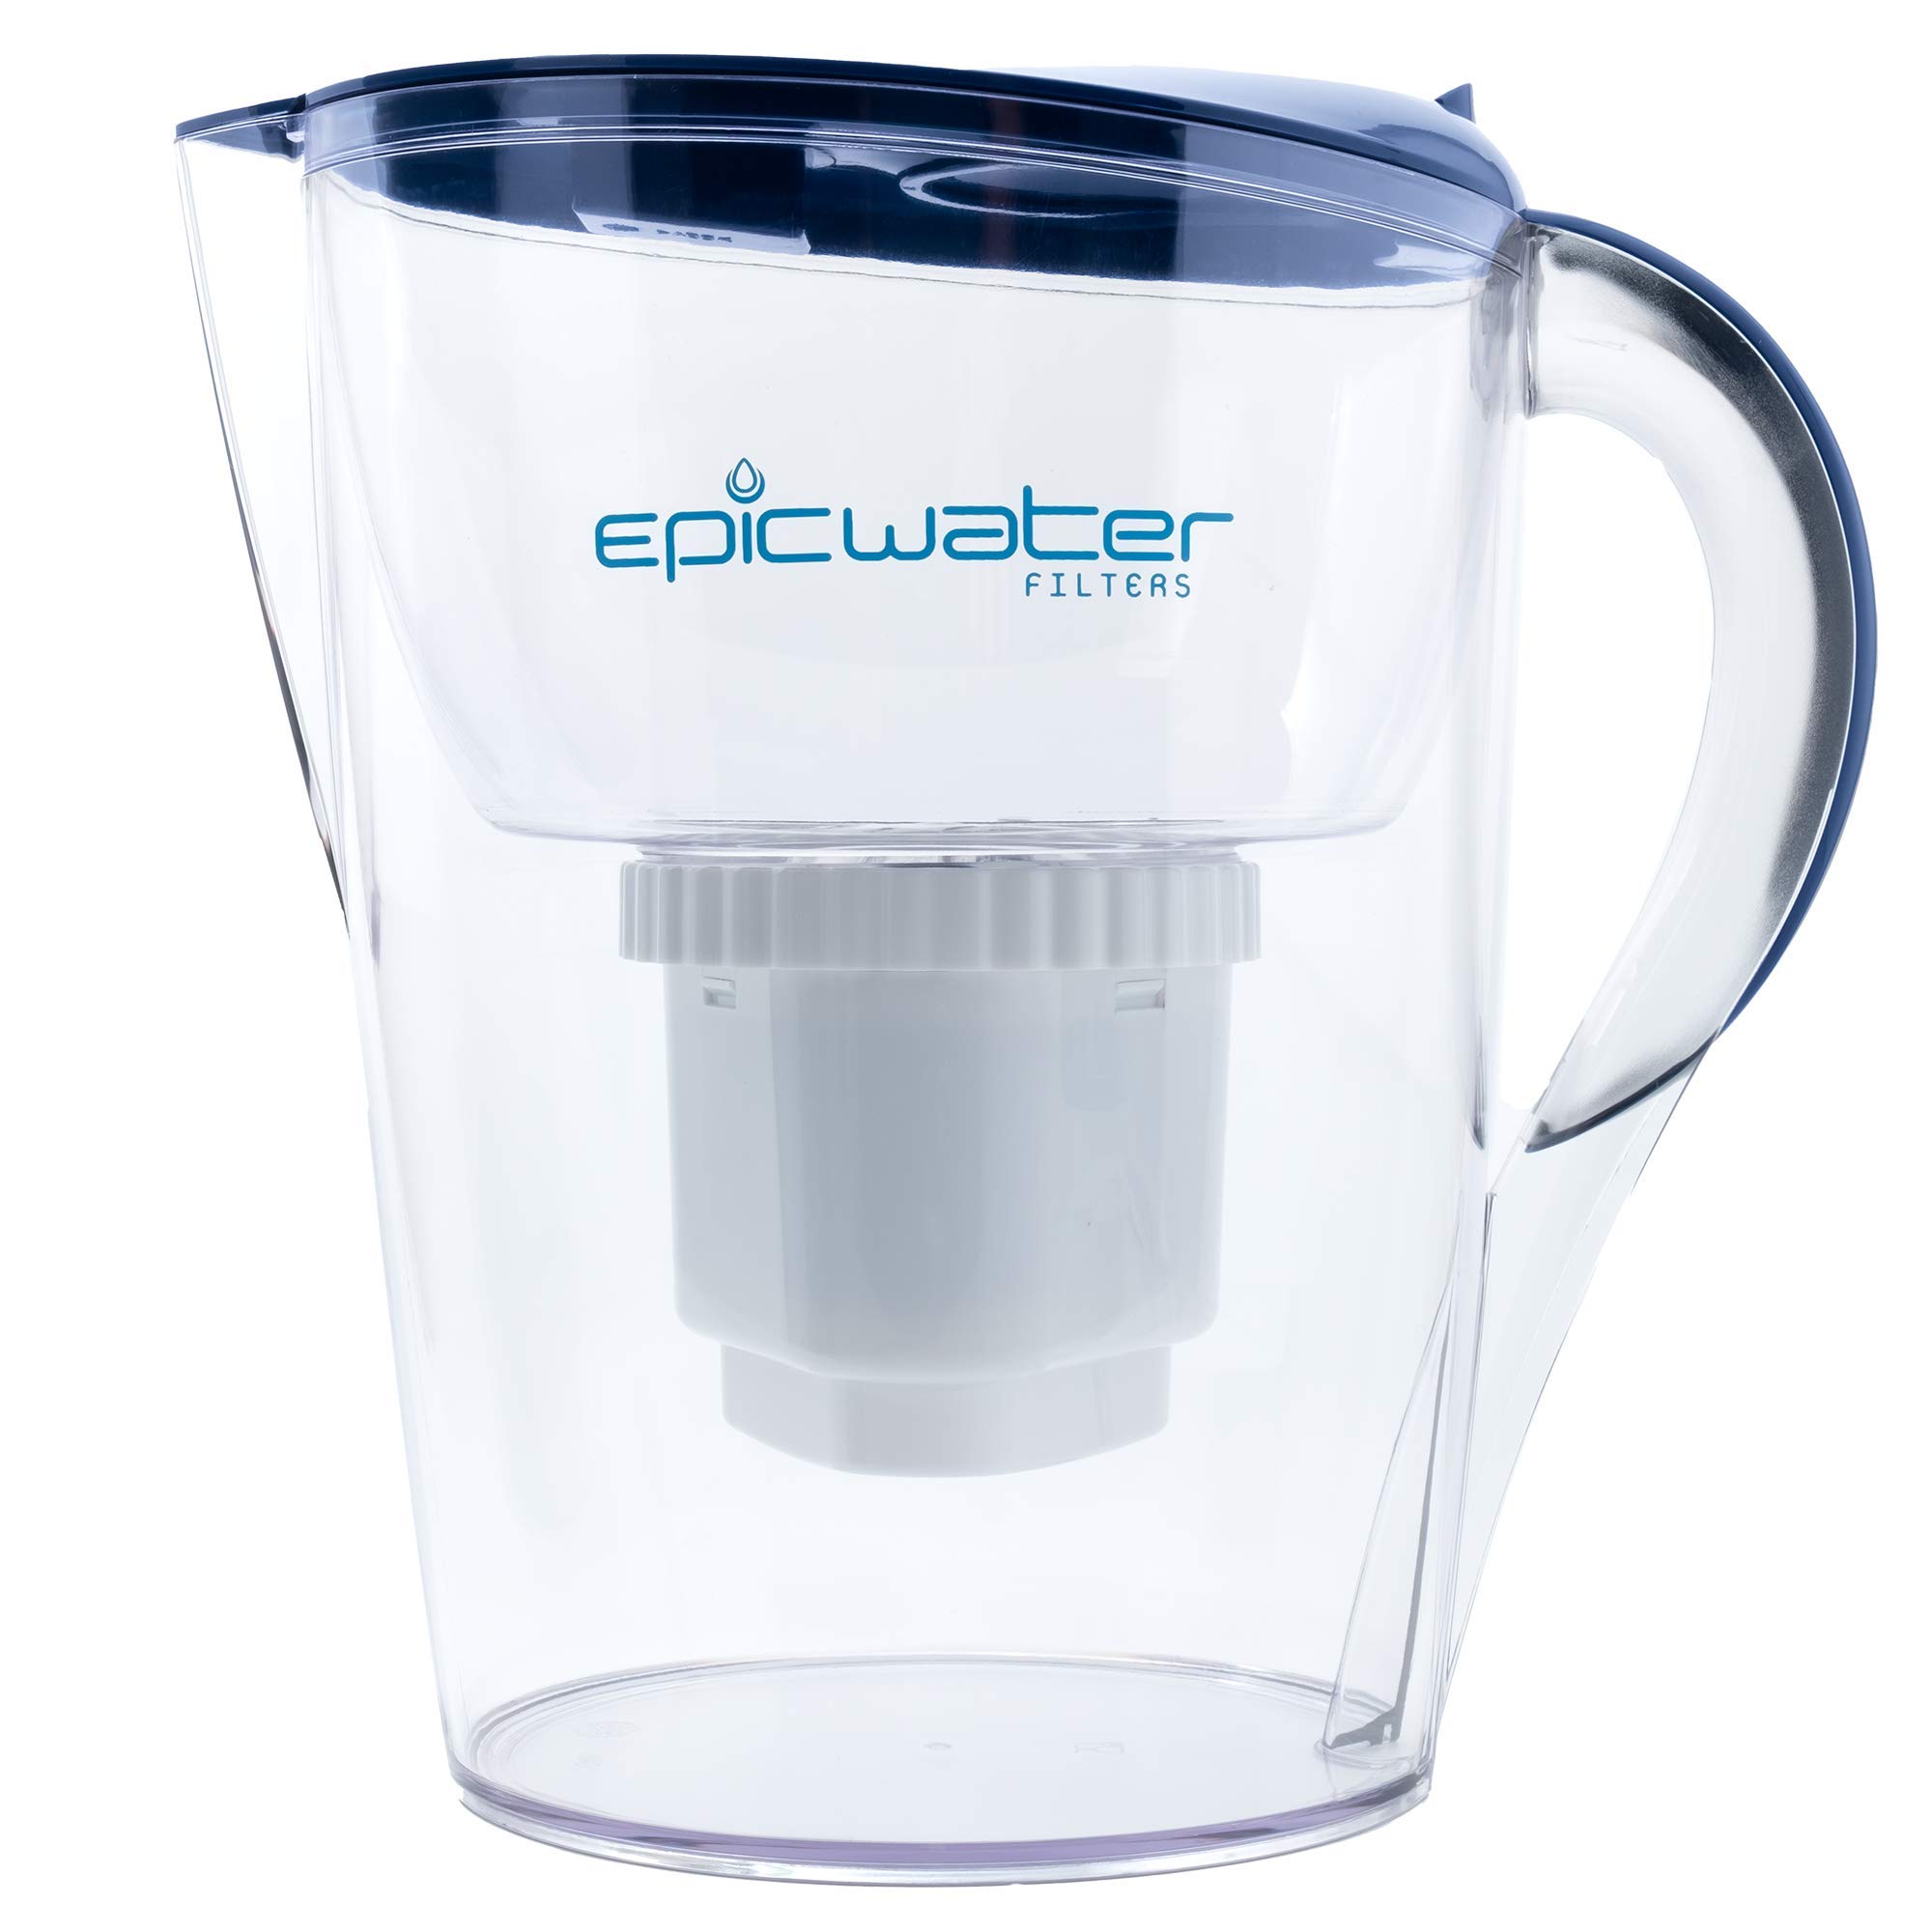  Epic Water Filters أباريق تصفية مياه الشرب الملحمية | 10 فناجين | 150 جالون فلتر | خالية من BPA | يزيل الفلورايد والكلور والر...